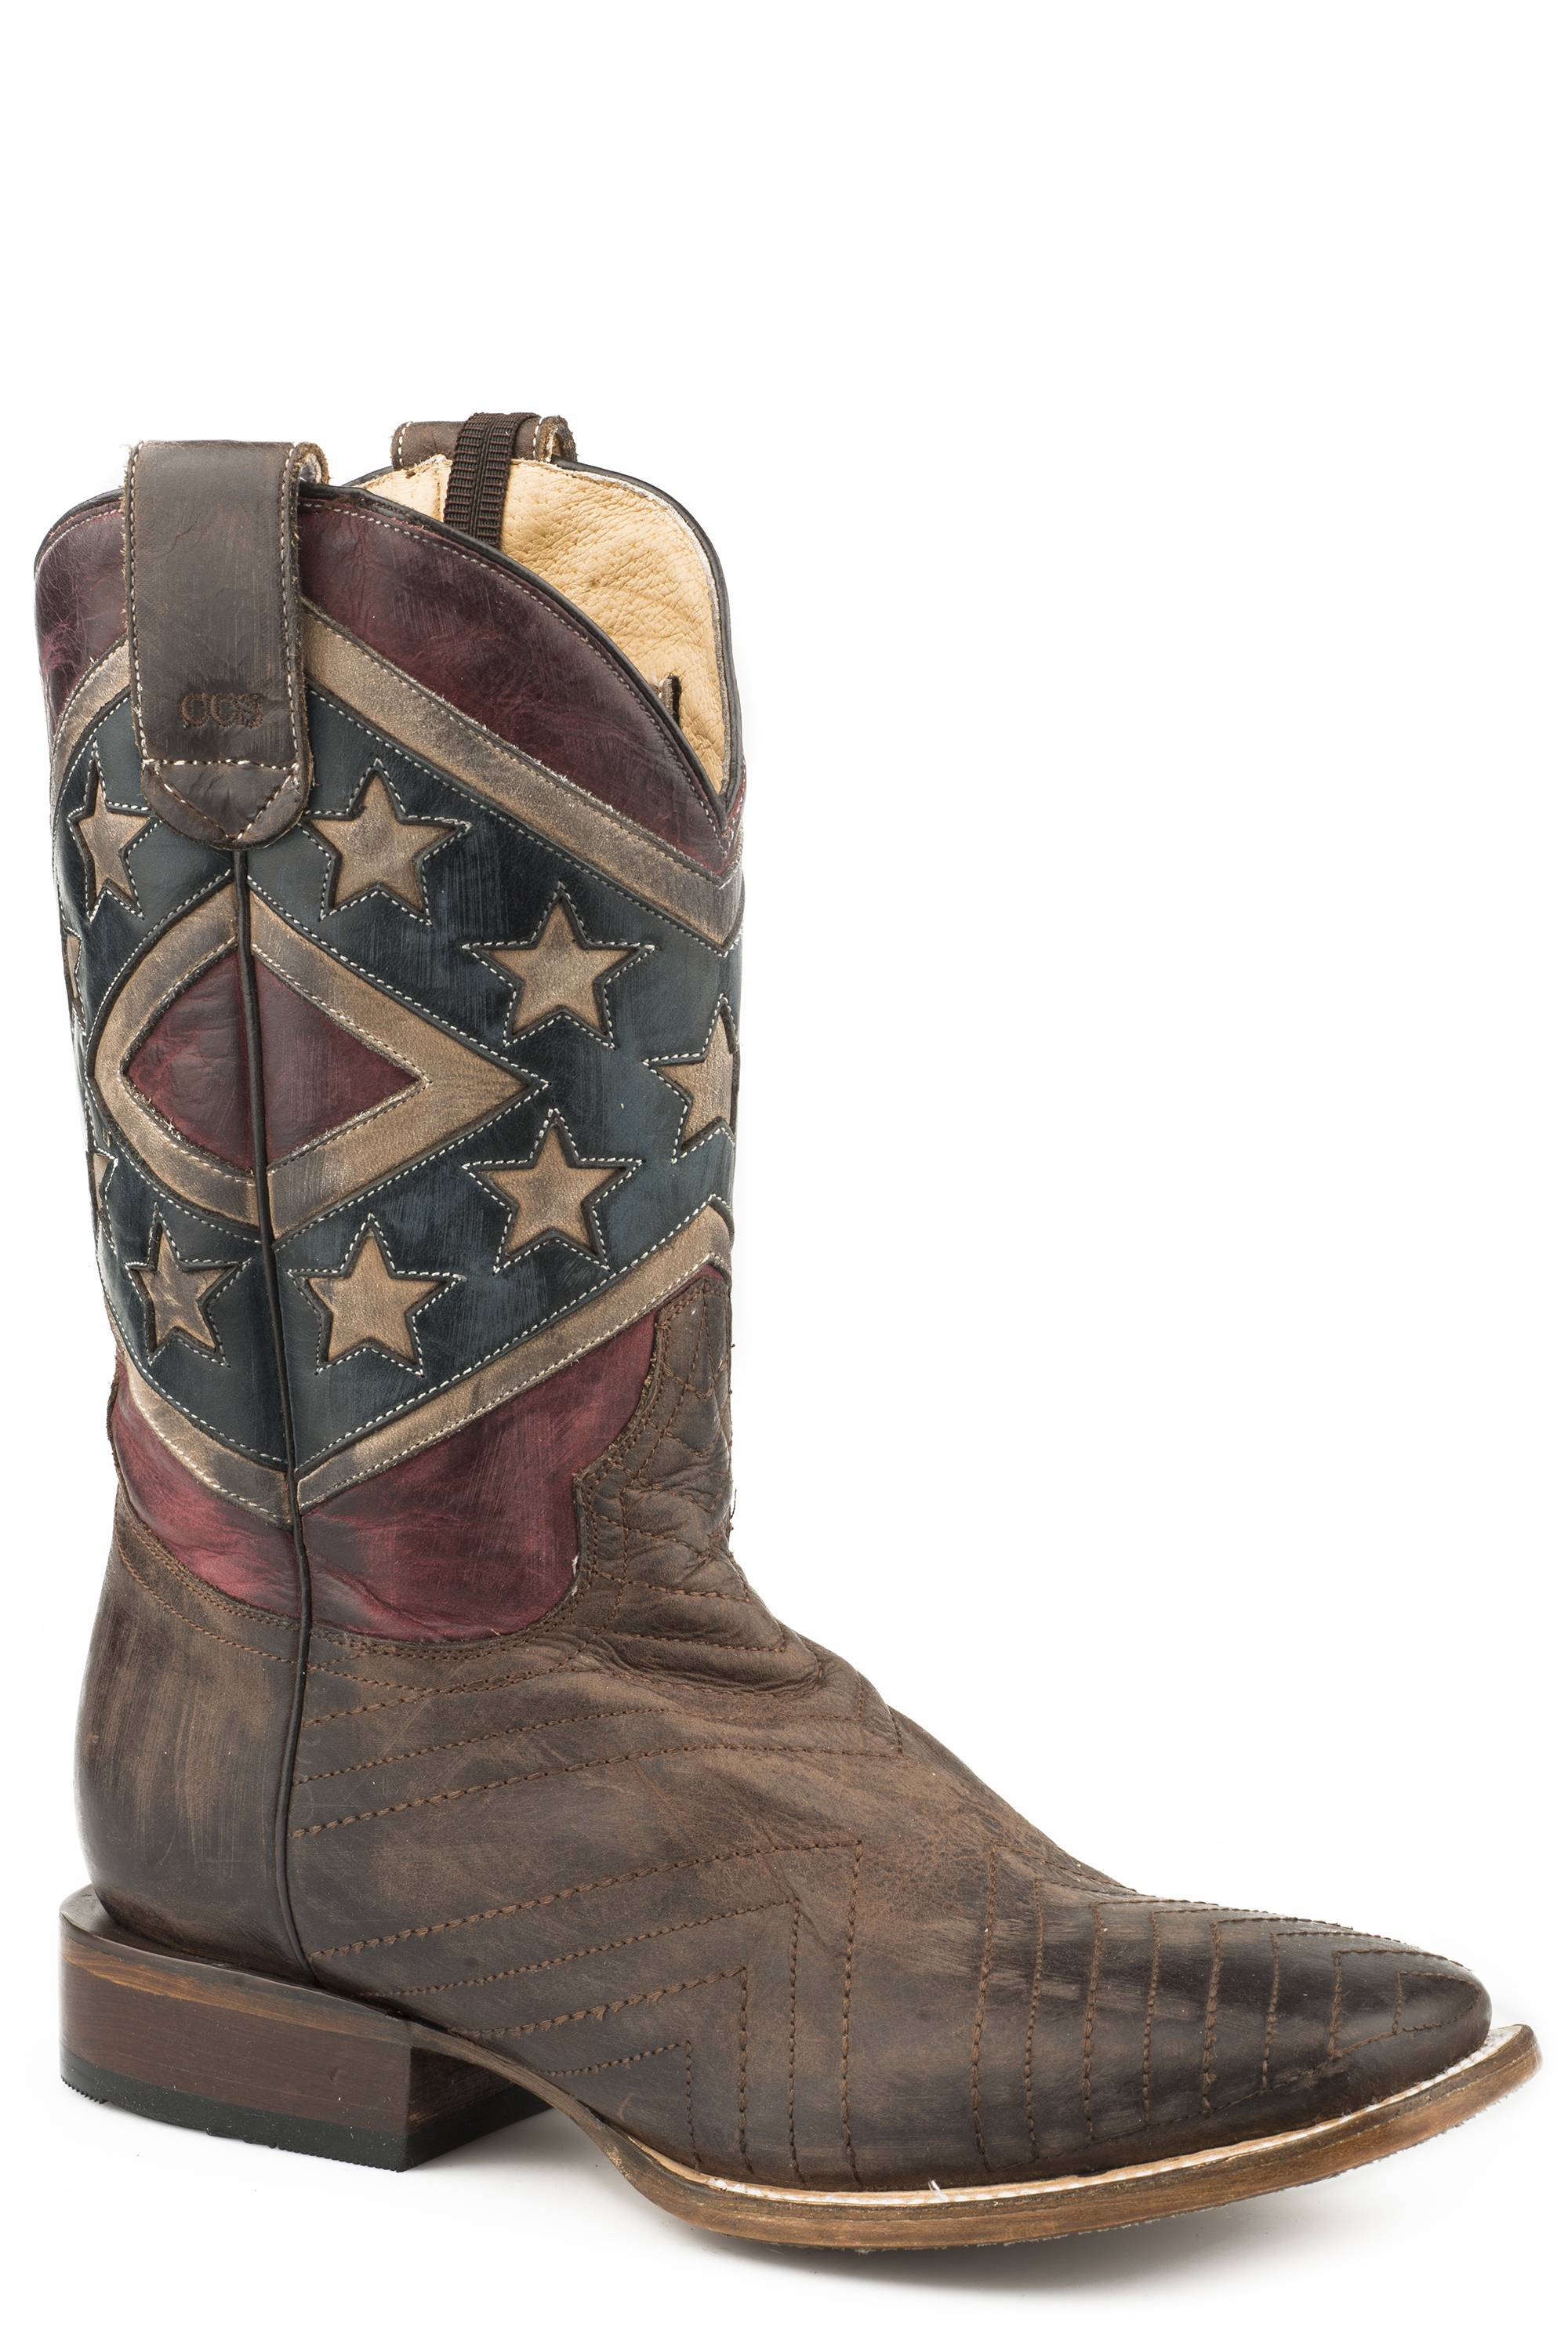 Transaktion Faszinieren Gesellig confederate flag cowboy boots Salz ...